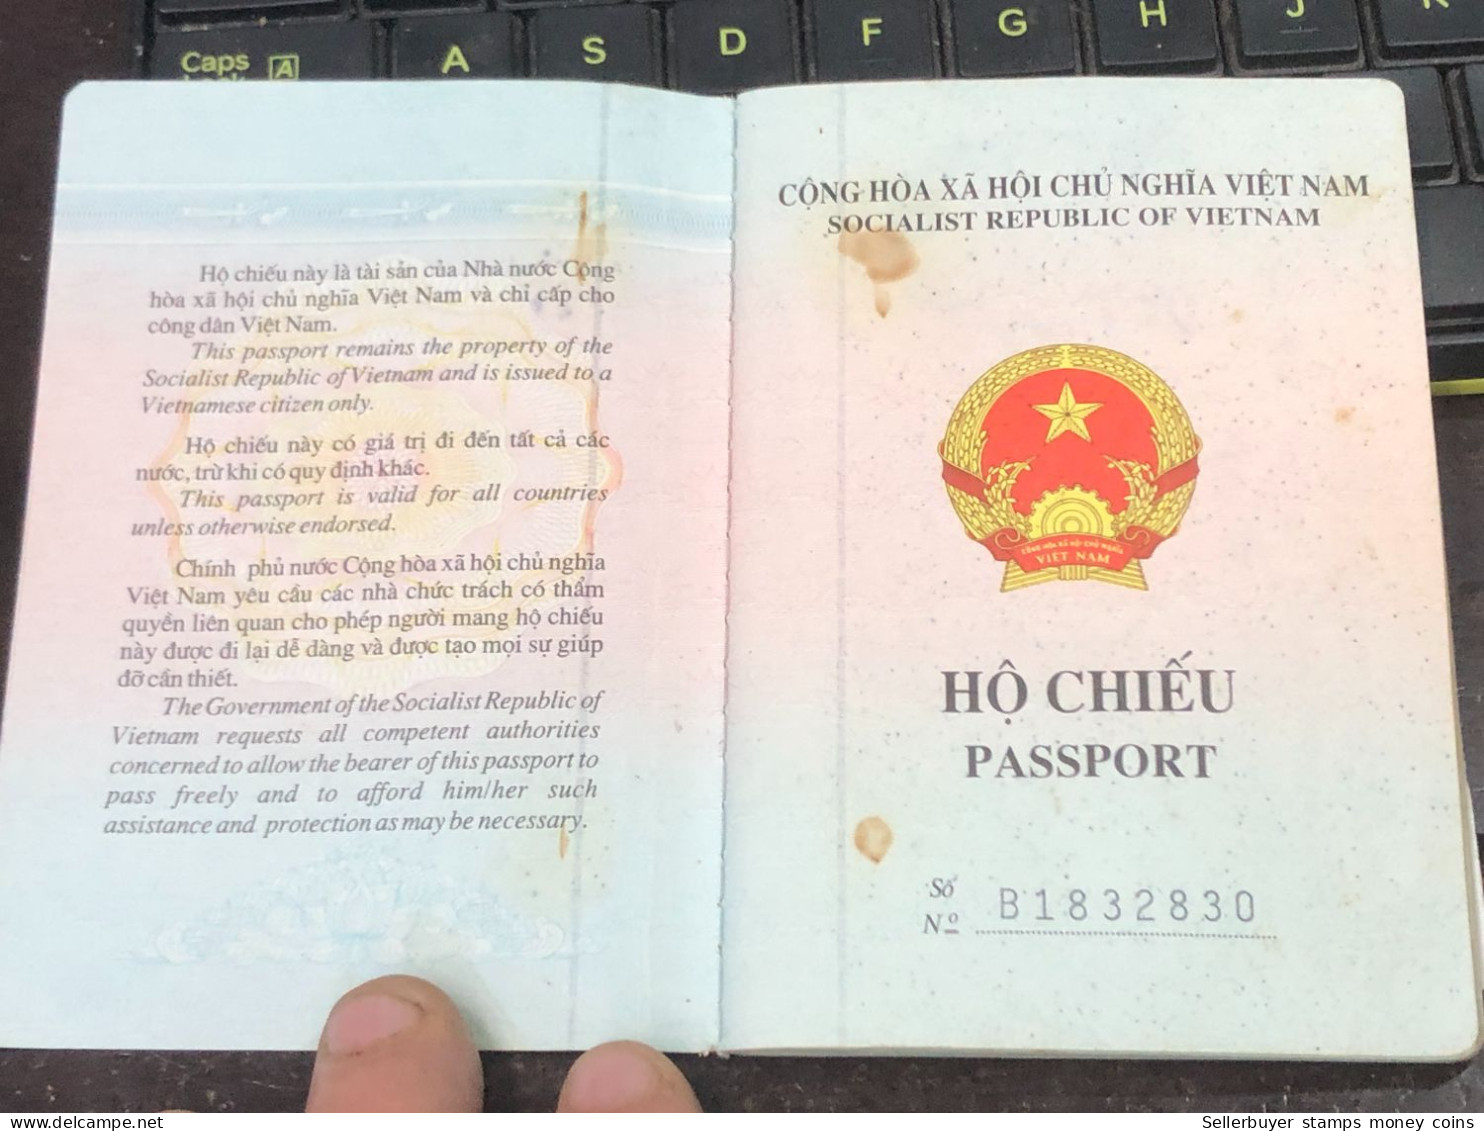 VIET NAMESE-OLD-ID PASSPORT VIET NAM-name-vuong Bich Nguyet-2007-1pcs Book - Verzamelingen